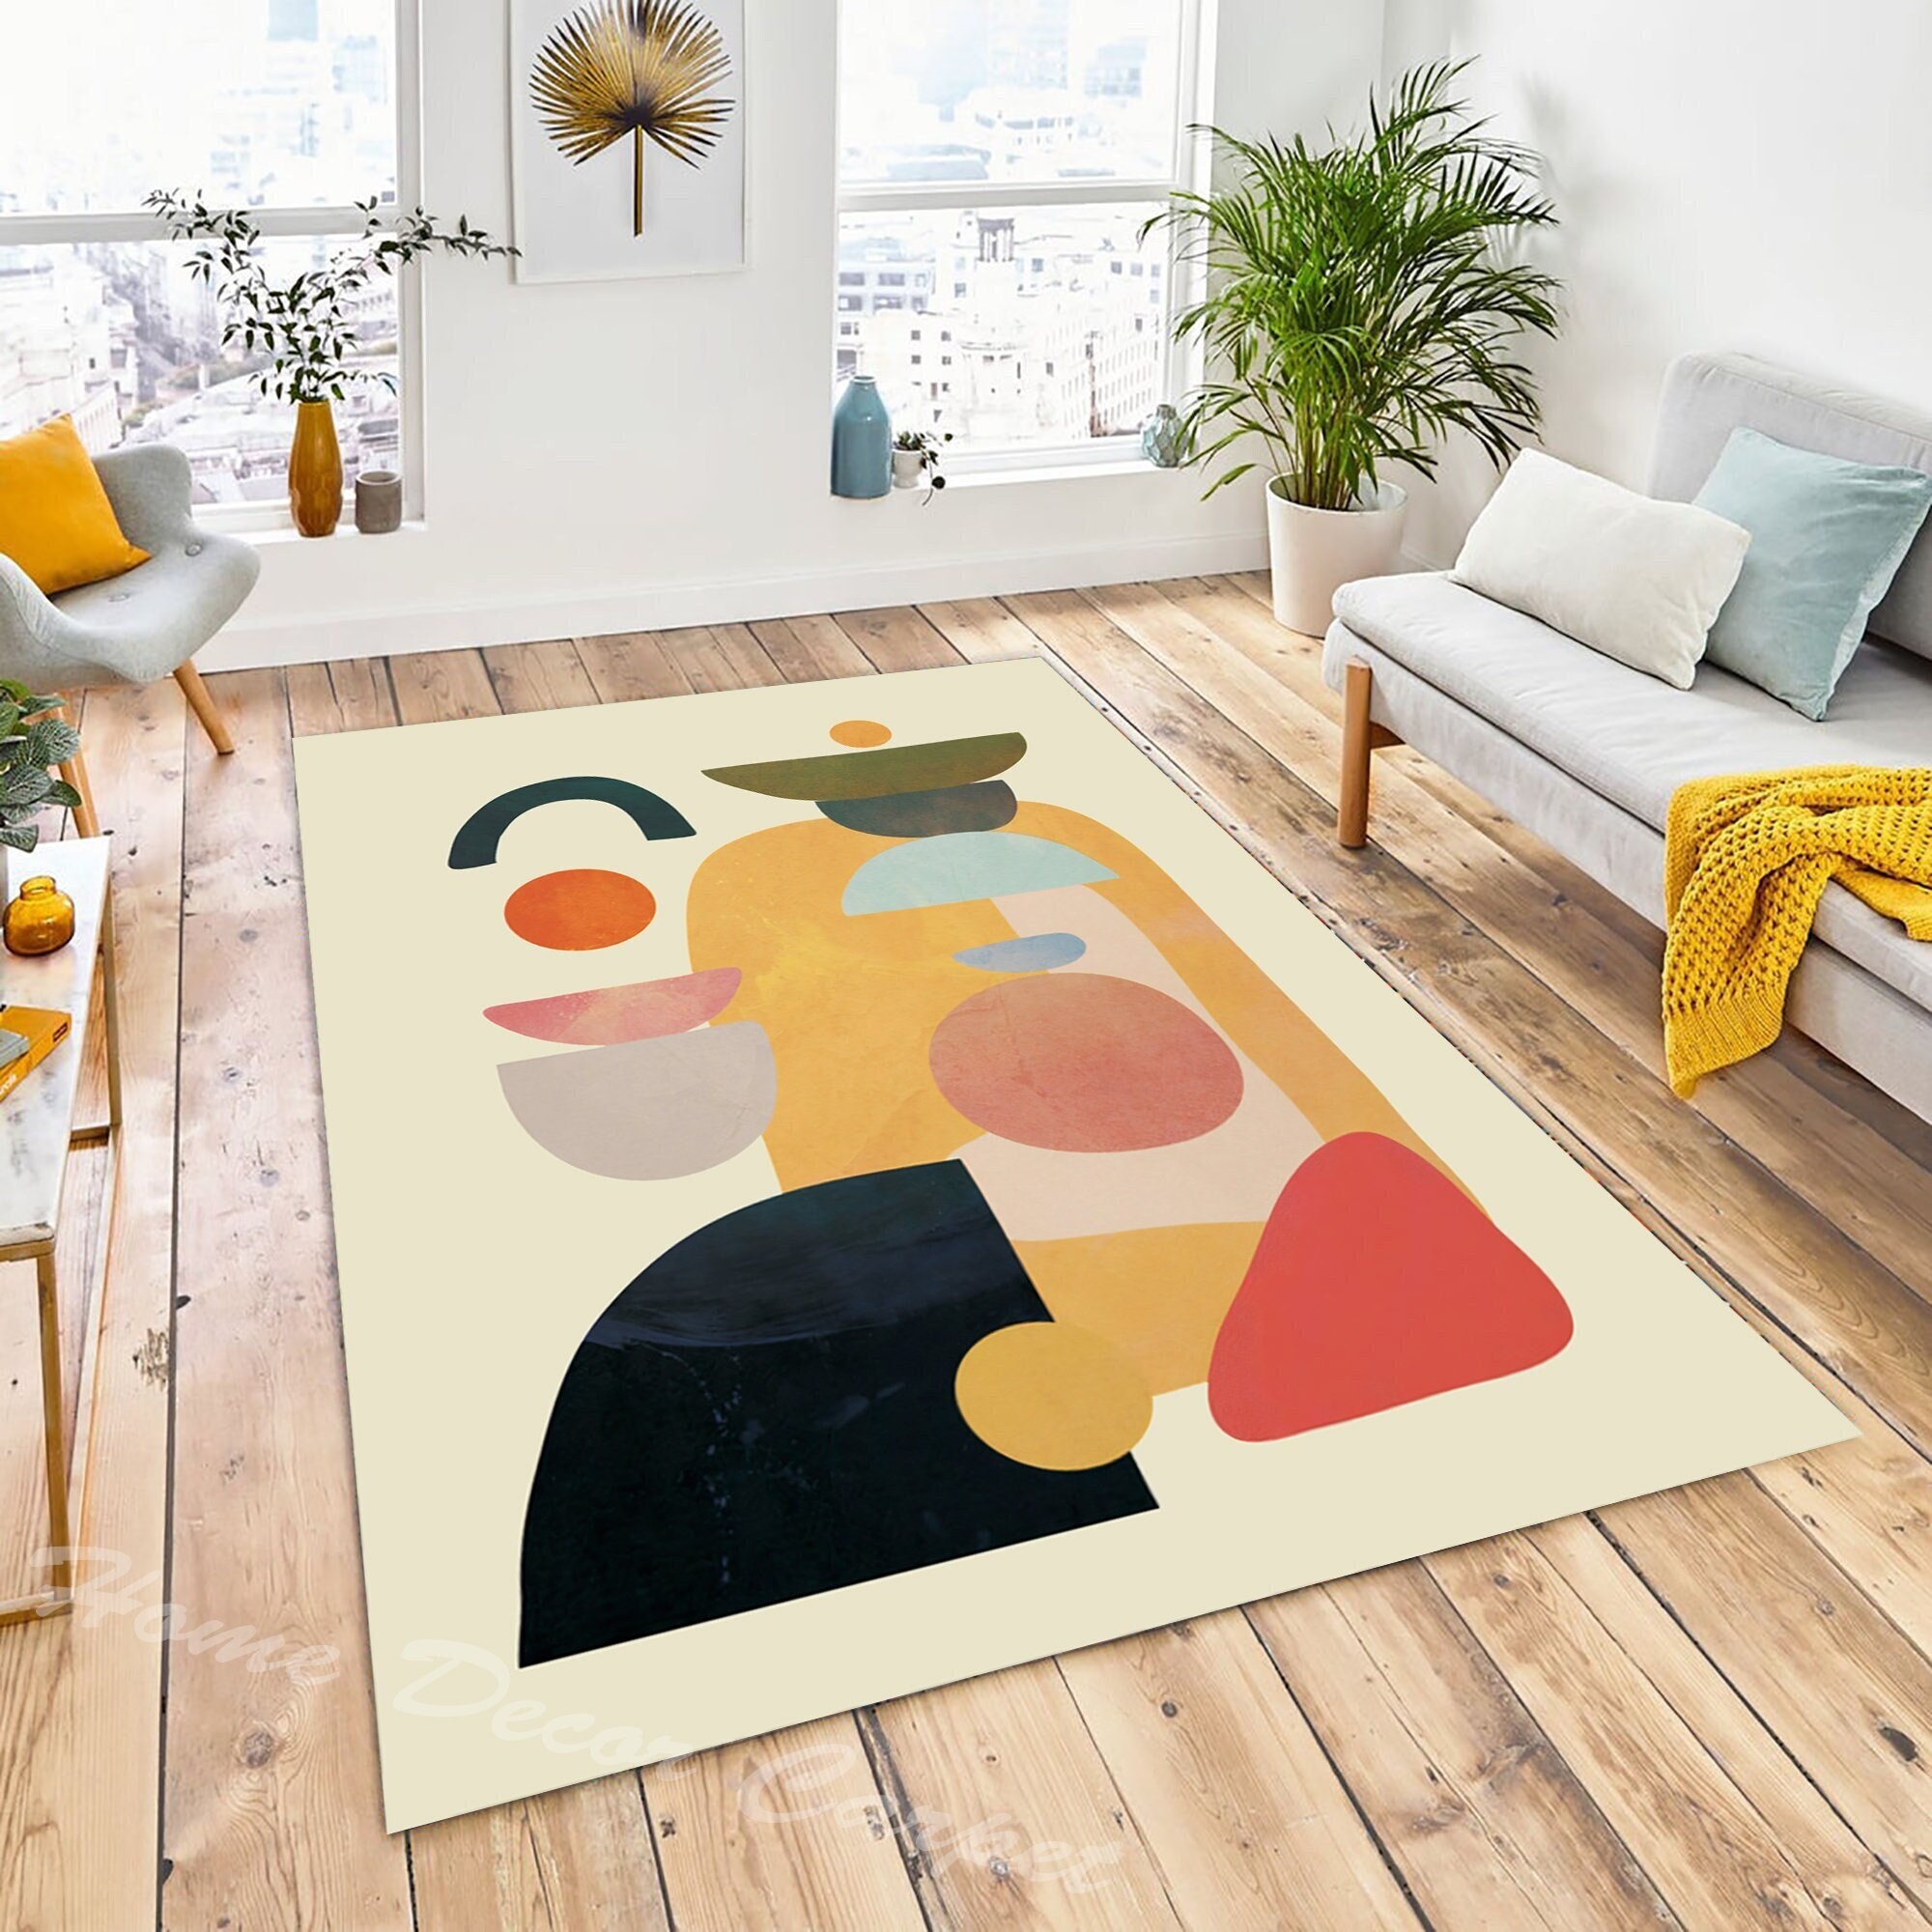 Modern and stylish European living room rugs Geometric print rugs